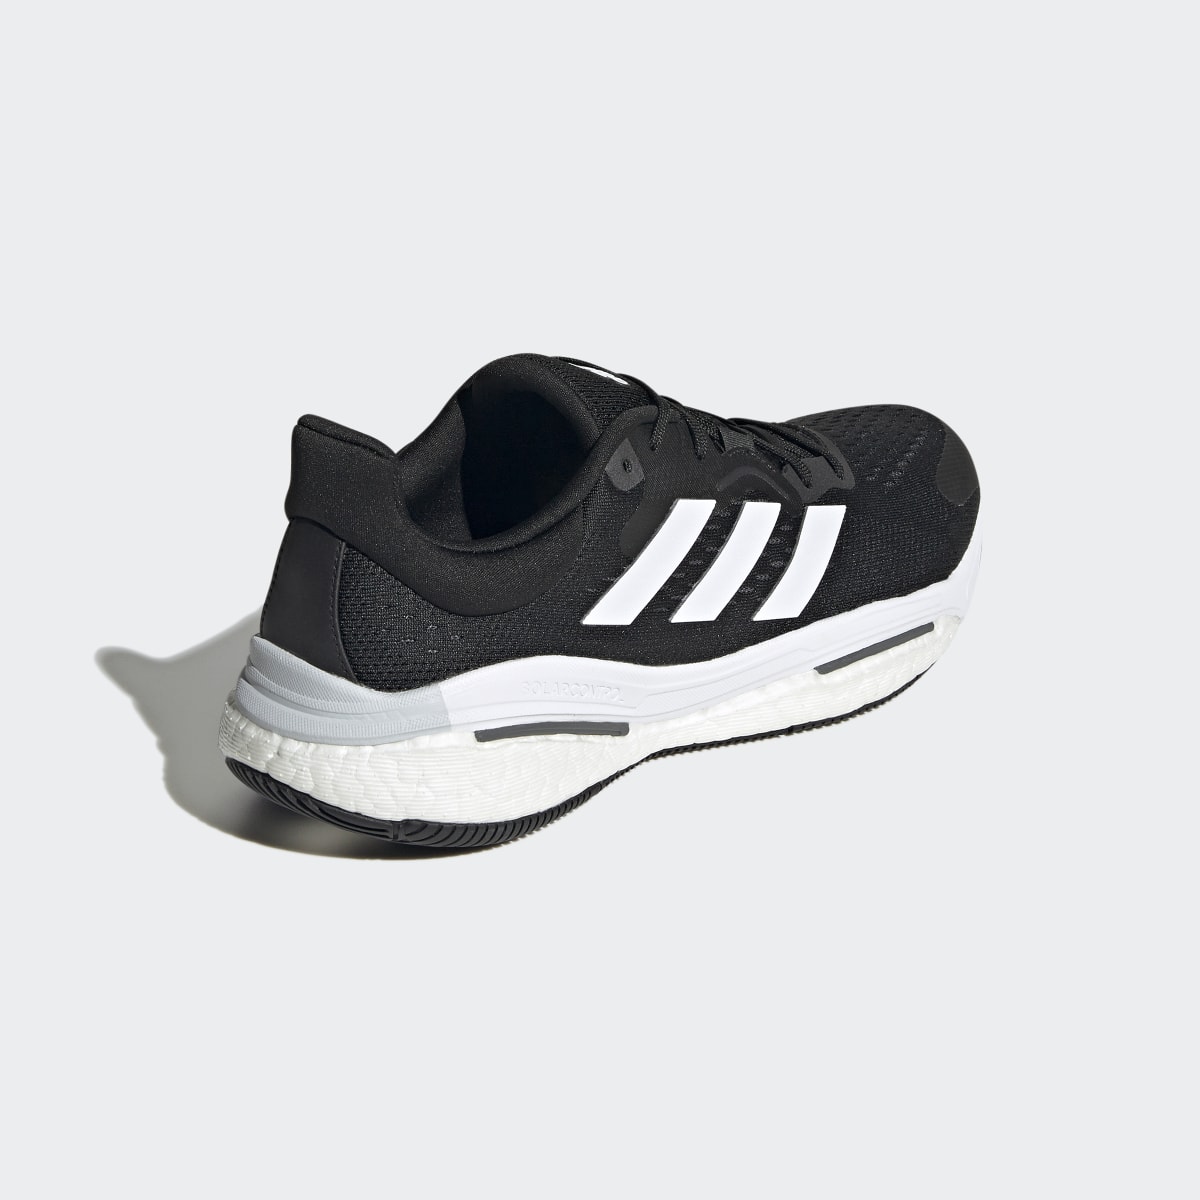 Adidas Solarcontrol Shoes. 9